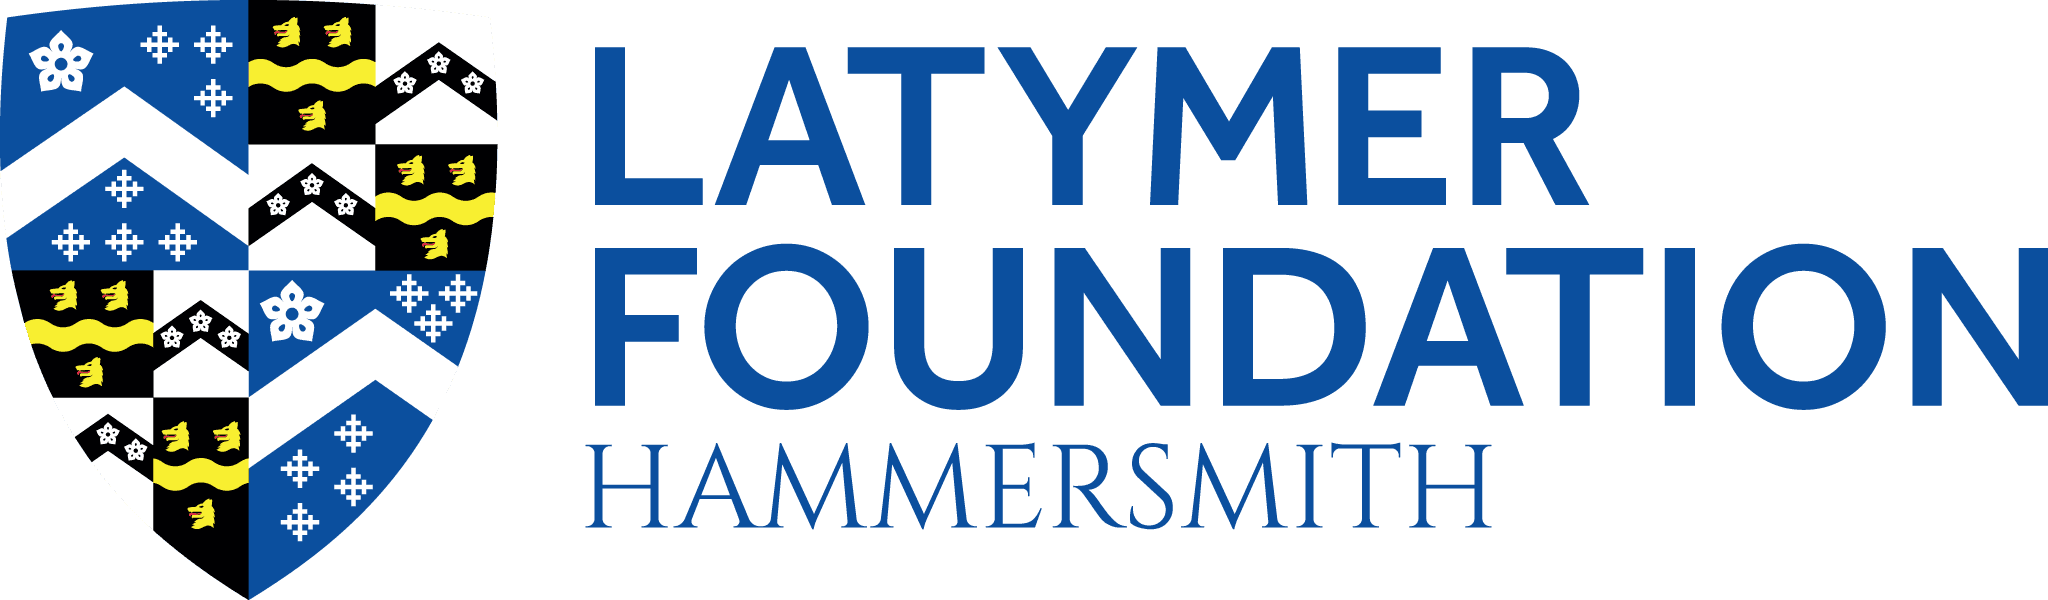 latymer-foundation logo.png